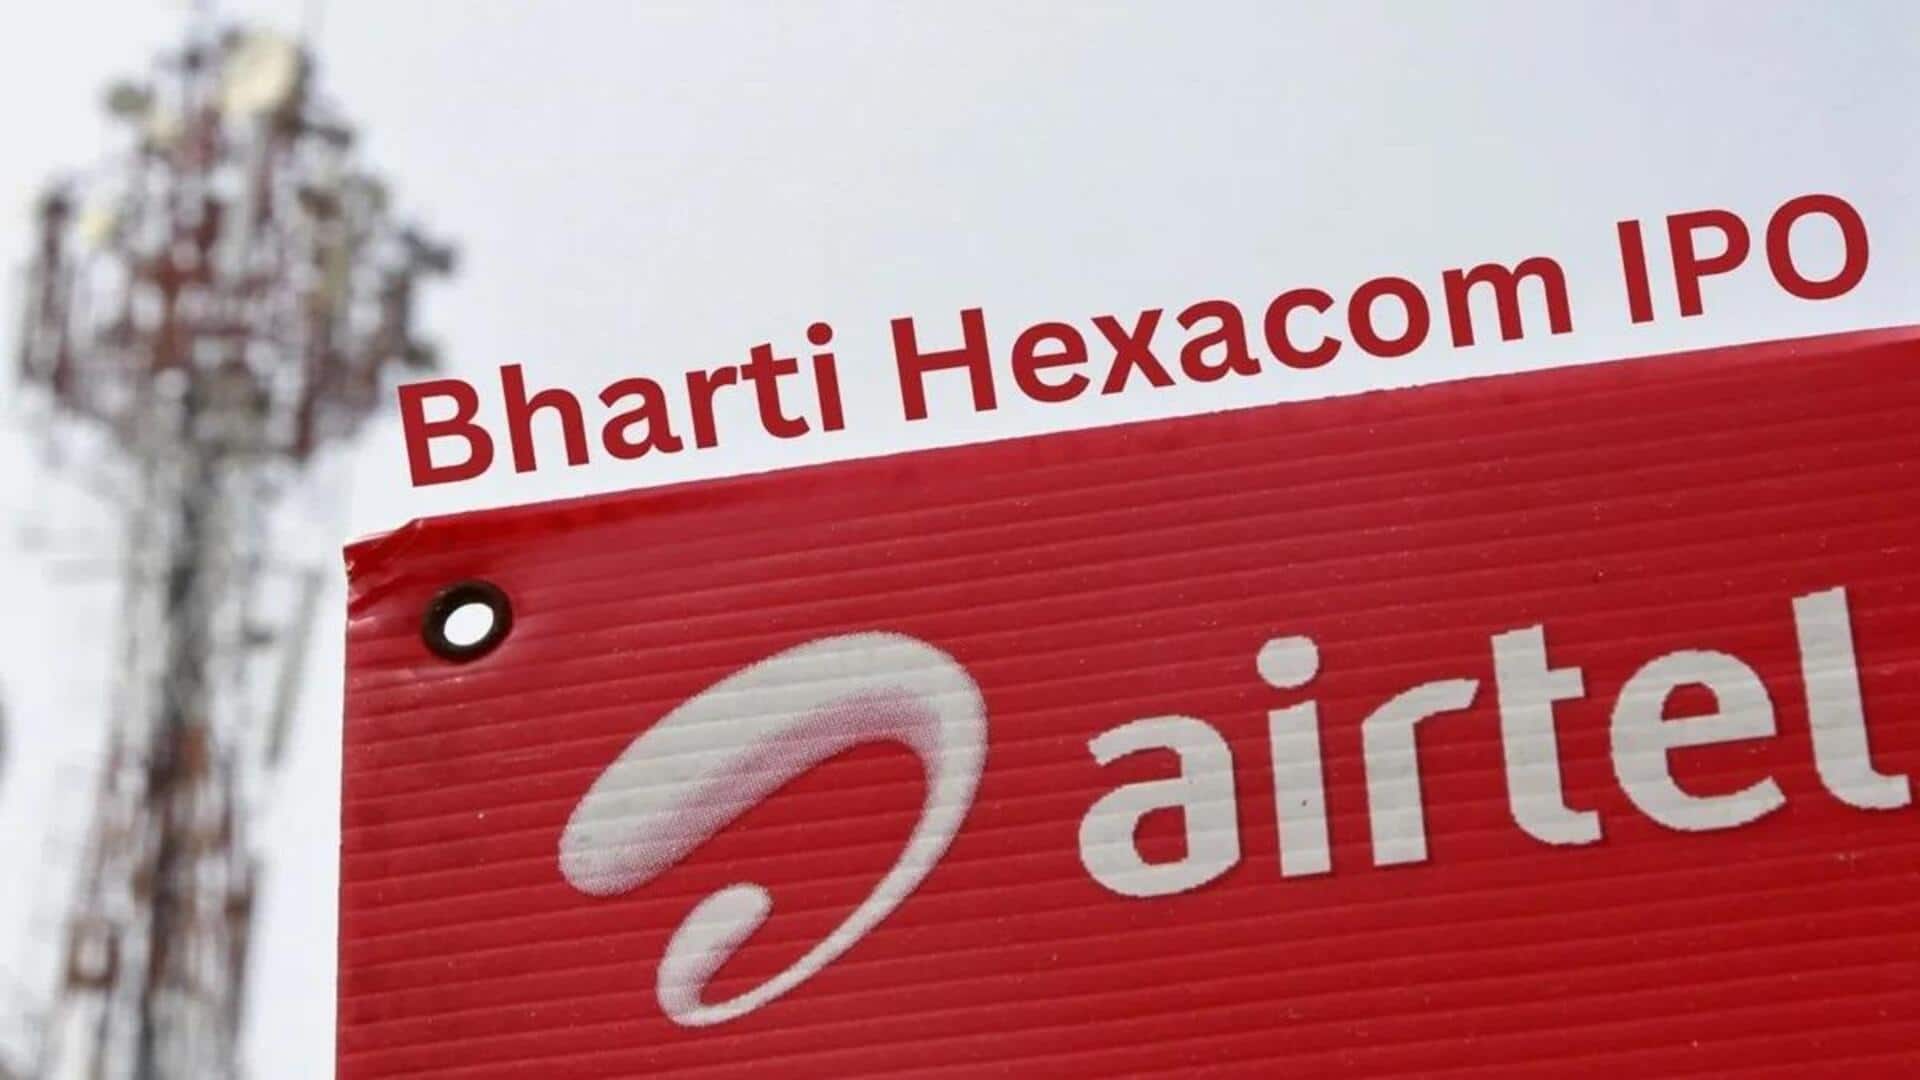 Bharti Hexacom's stock market debut exceeds expectations with 32% premium